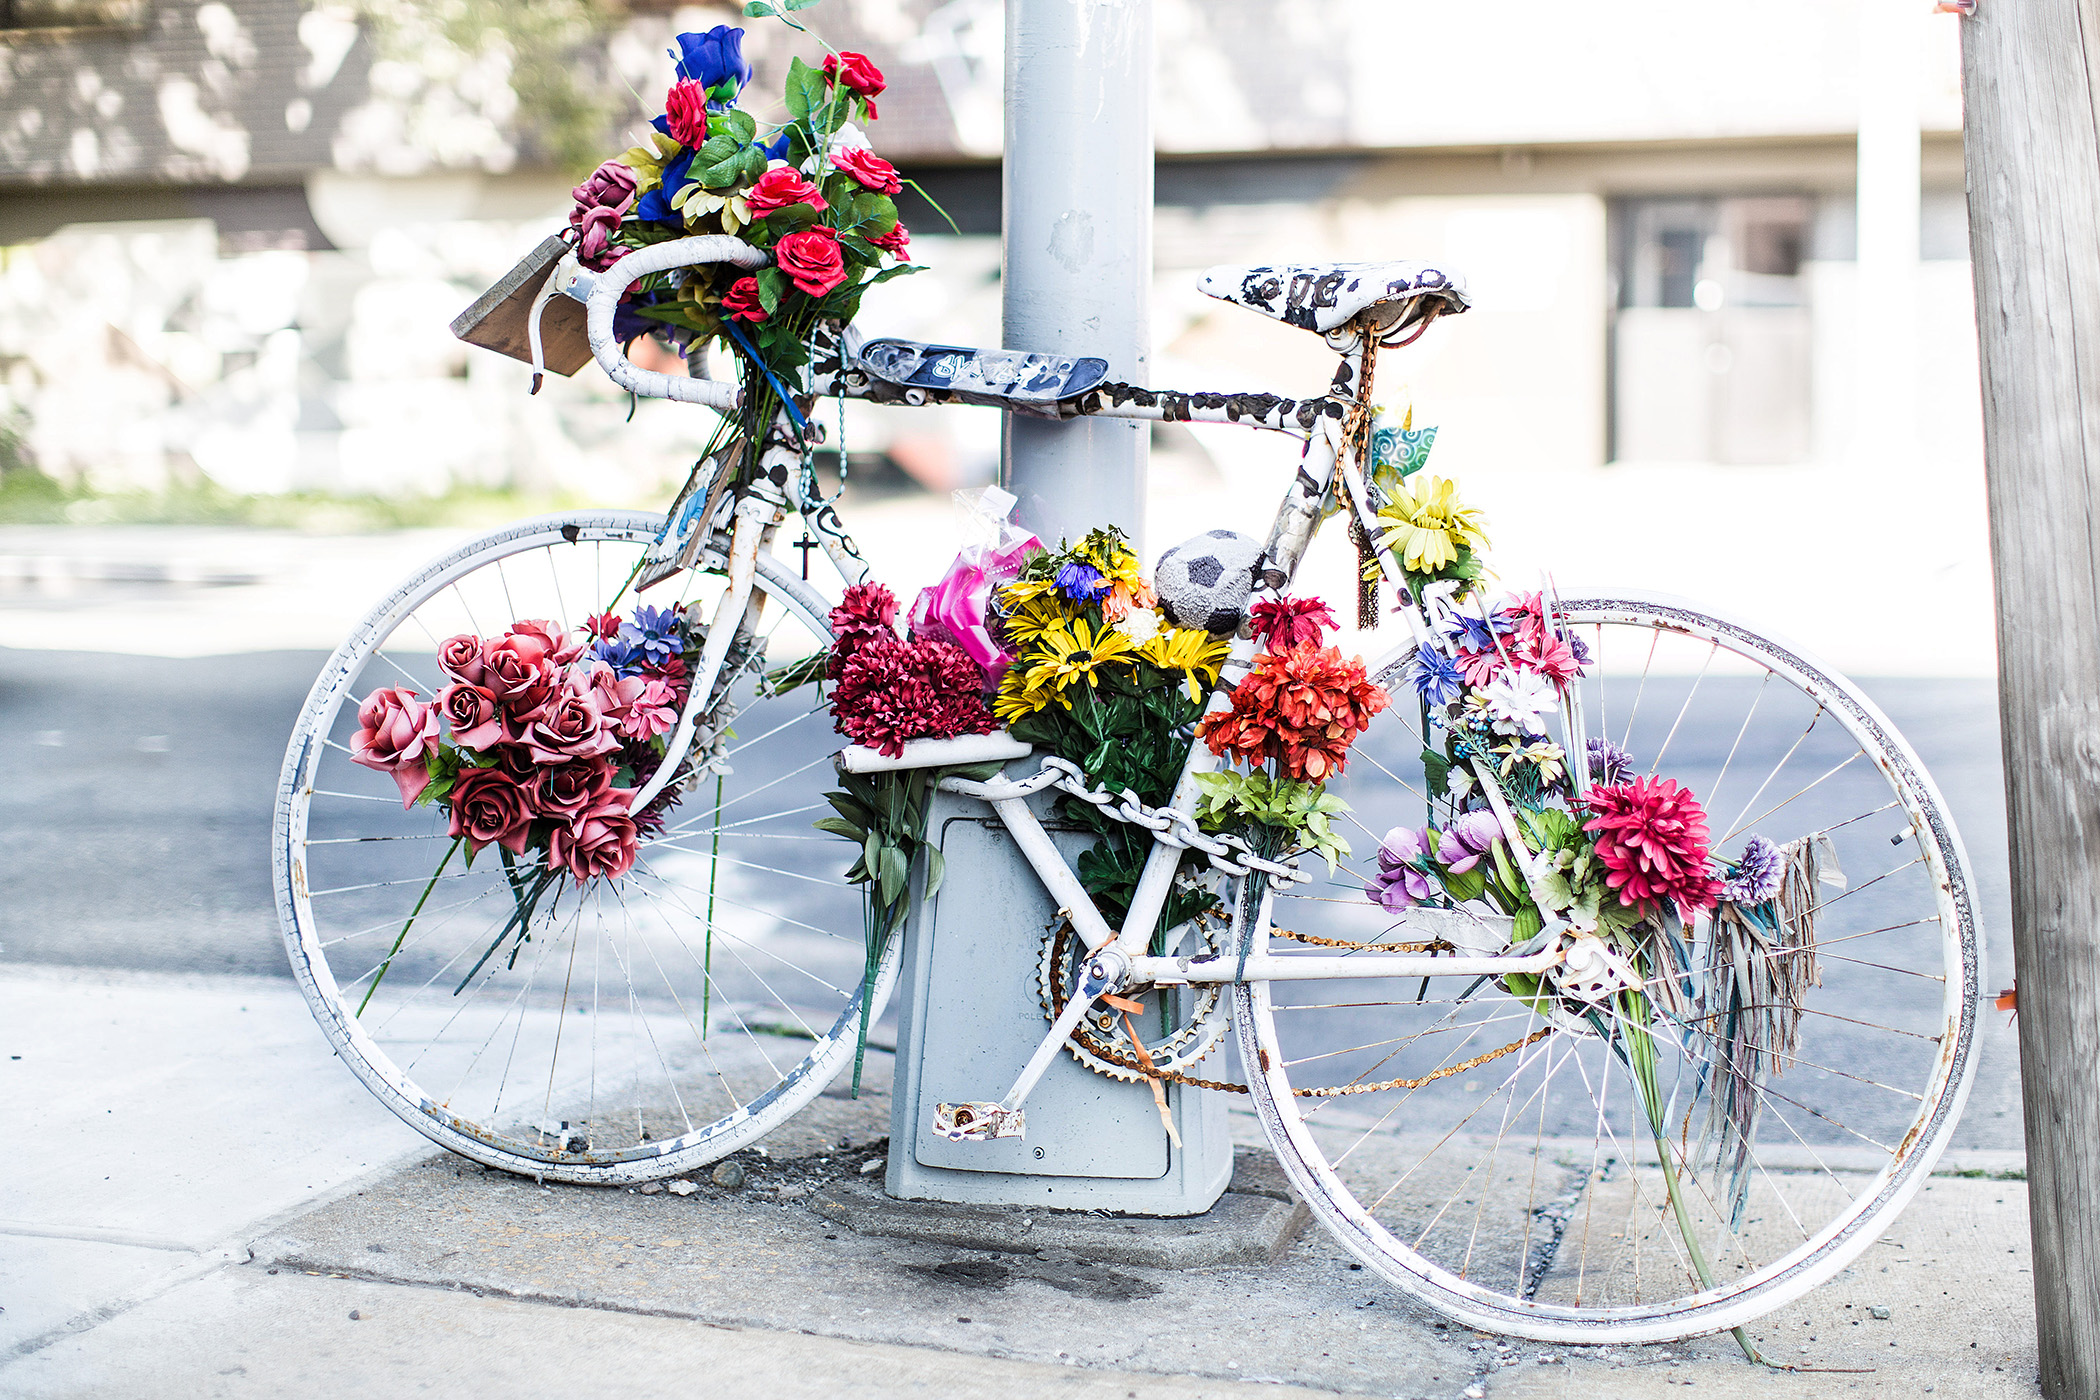 Kelly Boe Memorial Bike Ride